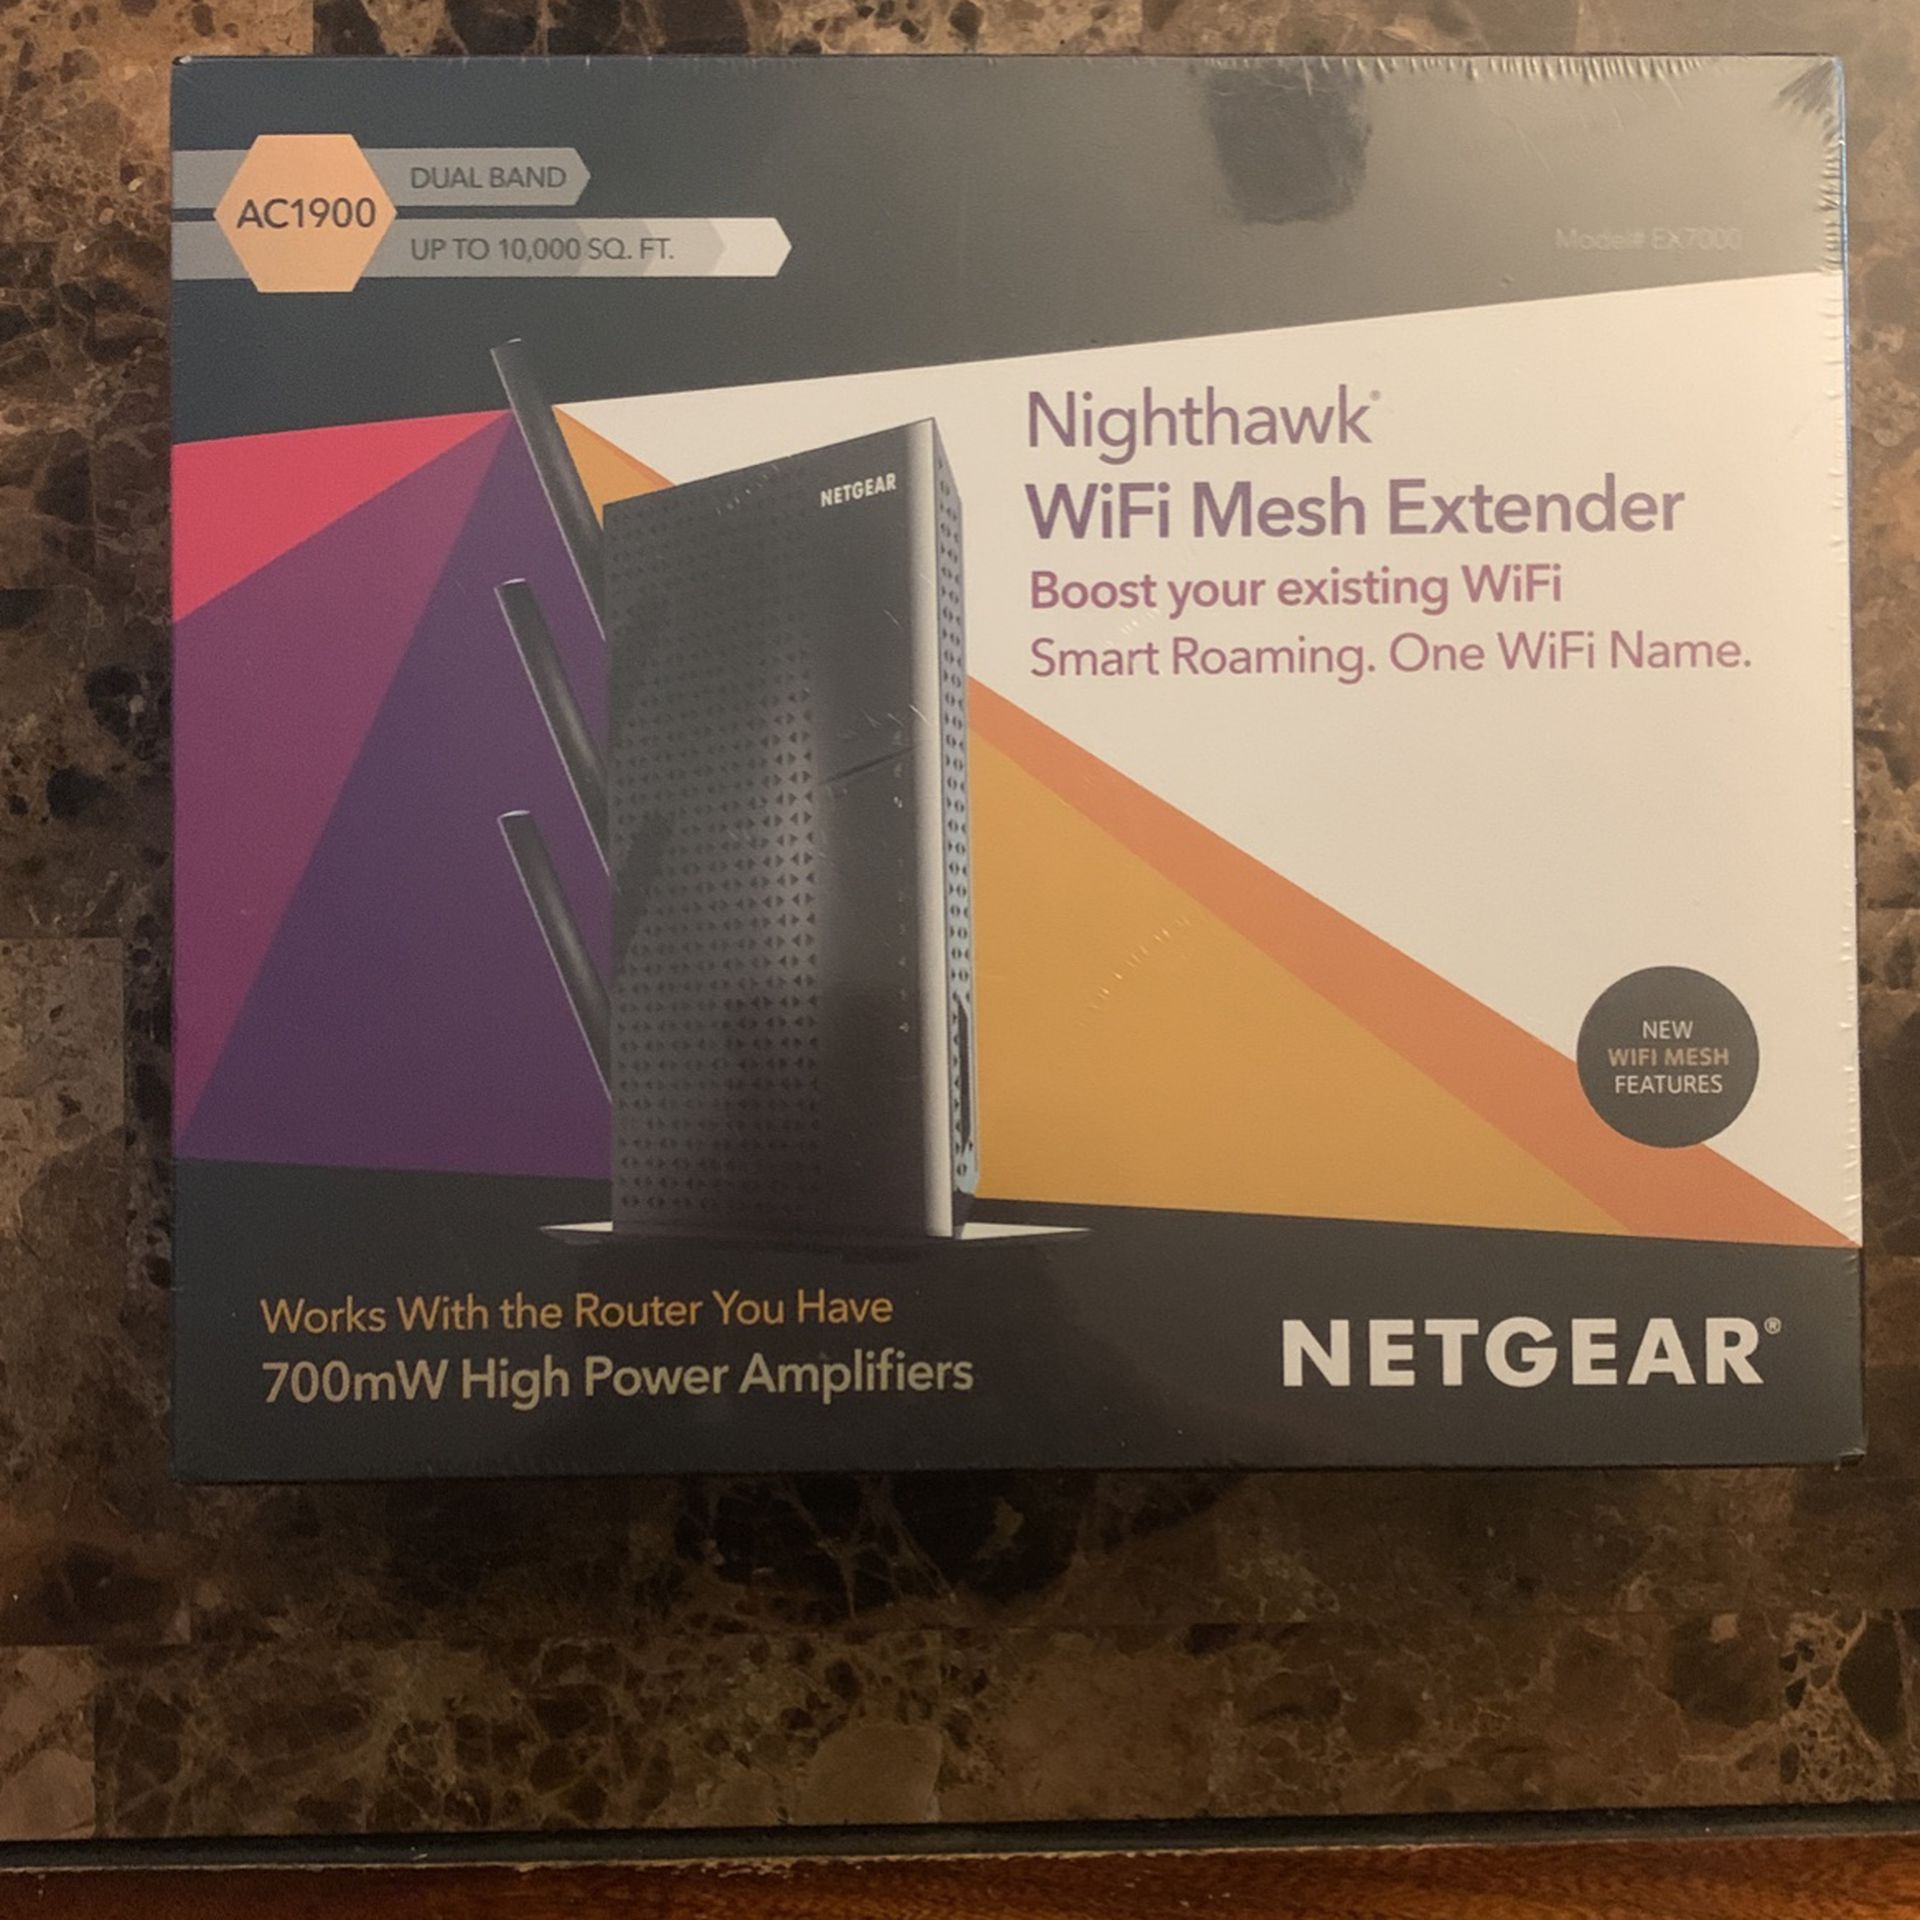 Netgear AC1900 Nighthawk WiFi Mesh Extender